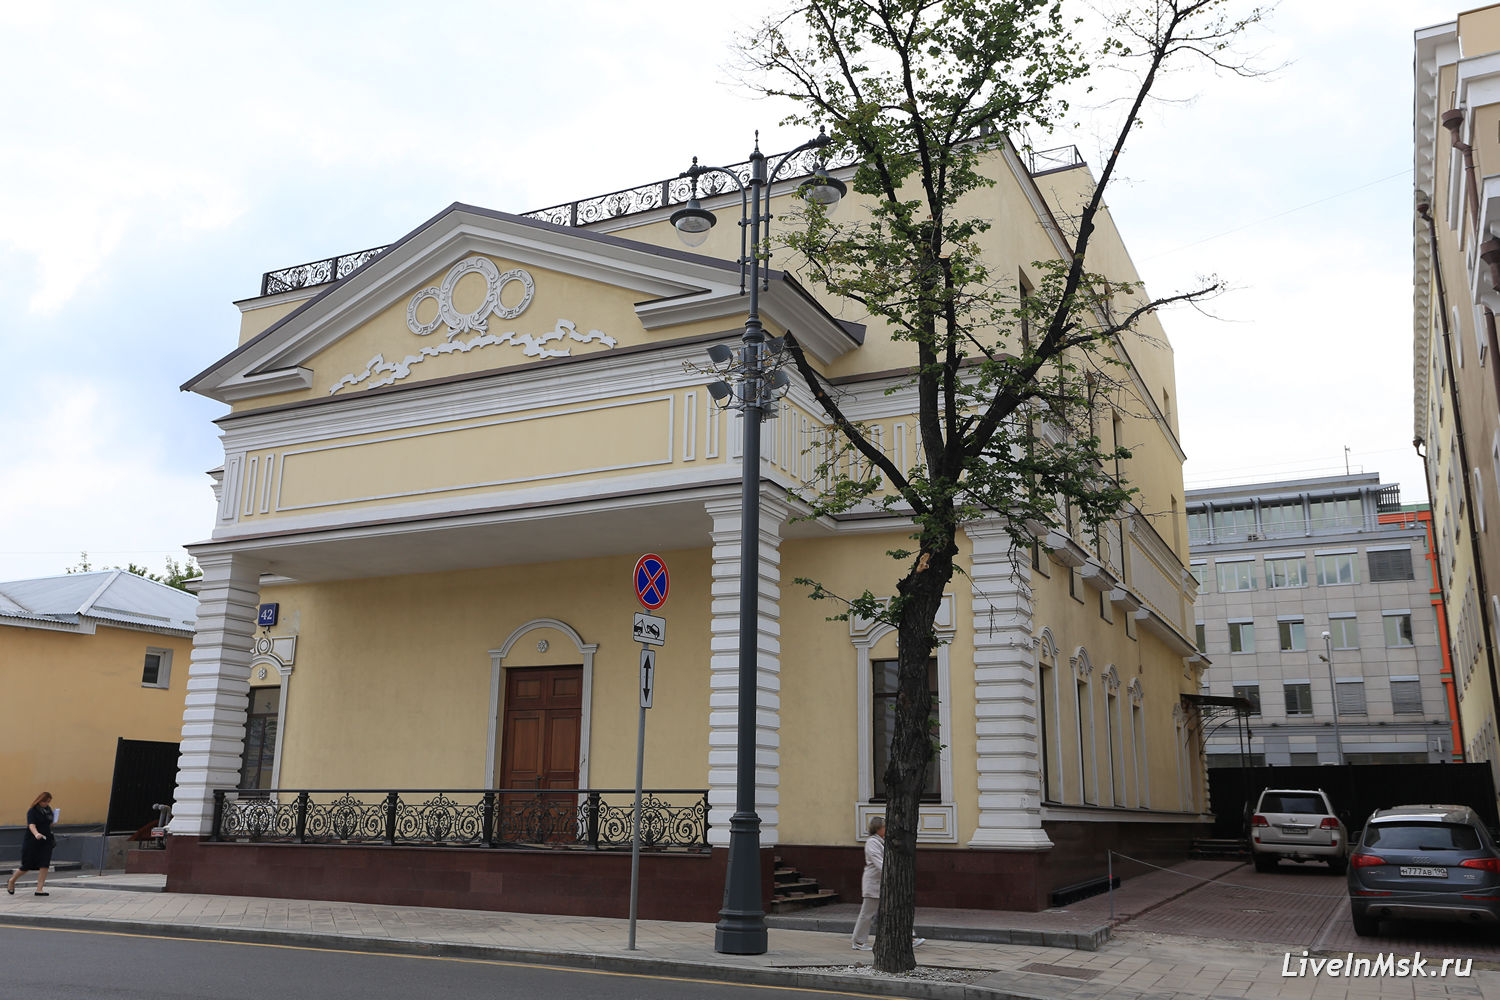 Здание на месте дома купца Феоктистова, фото 2015 года